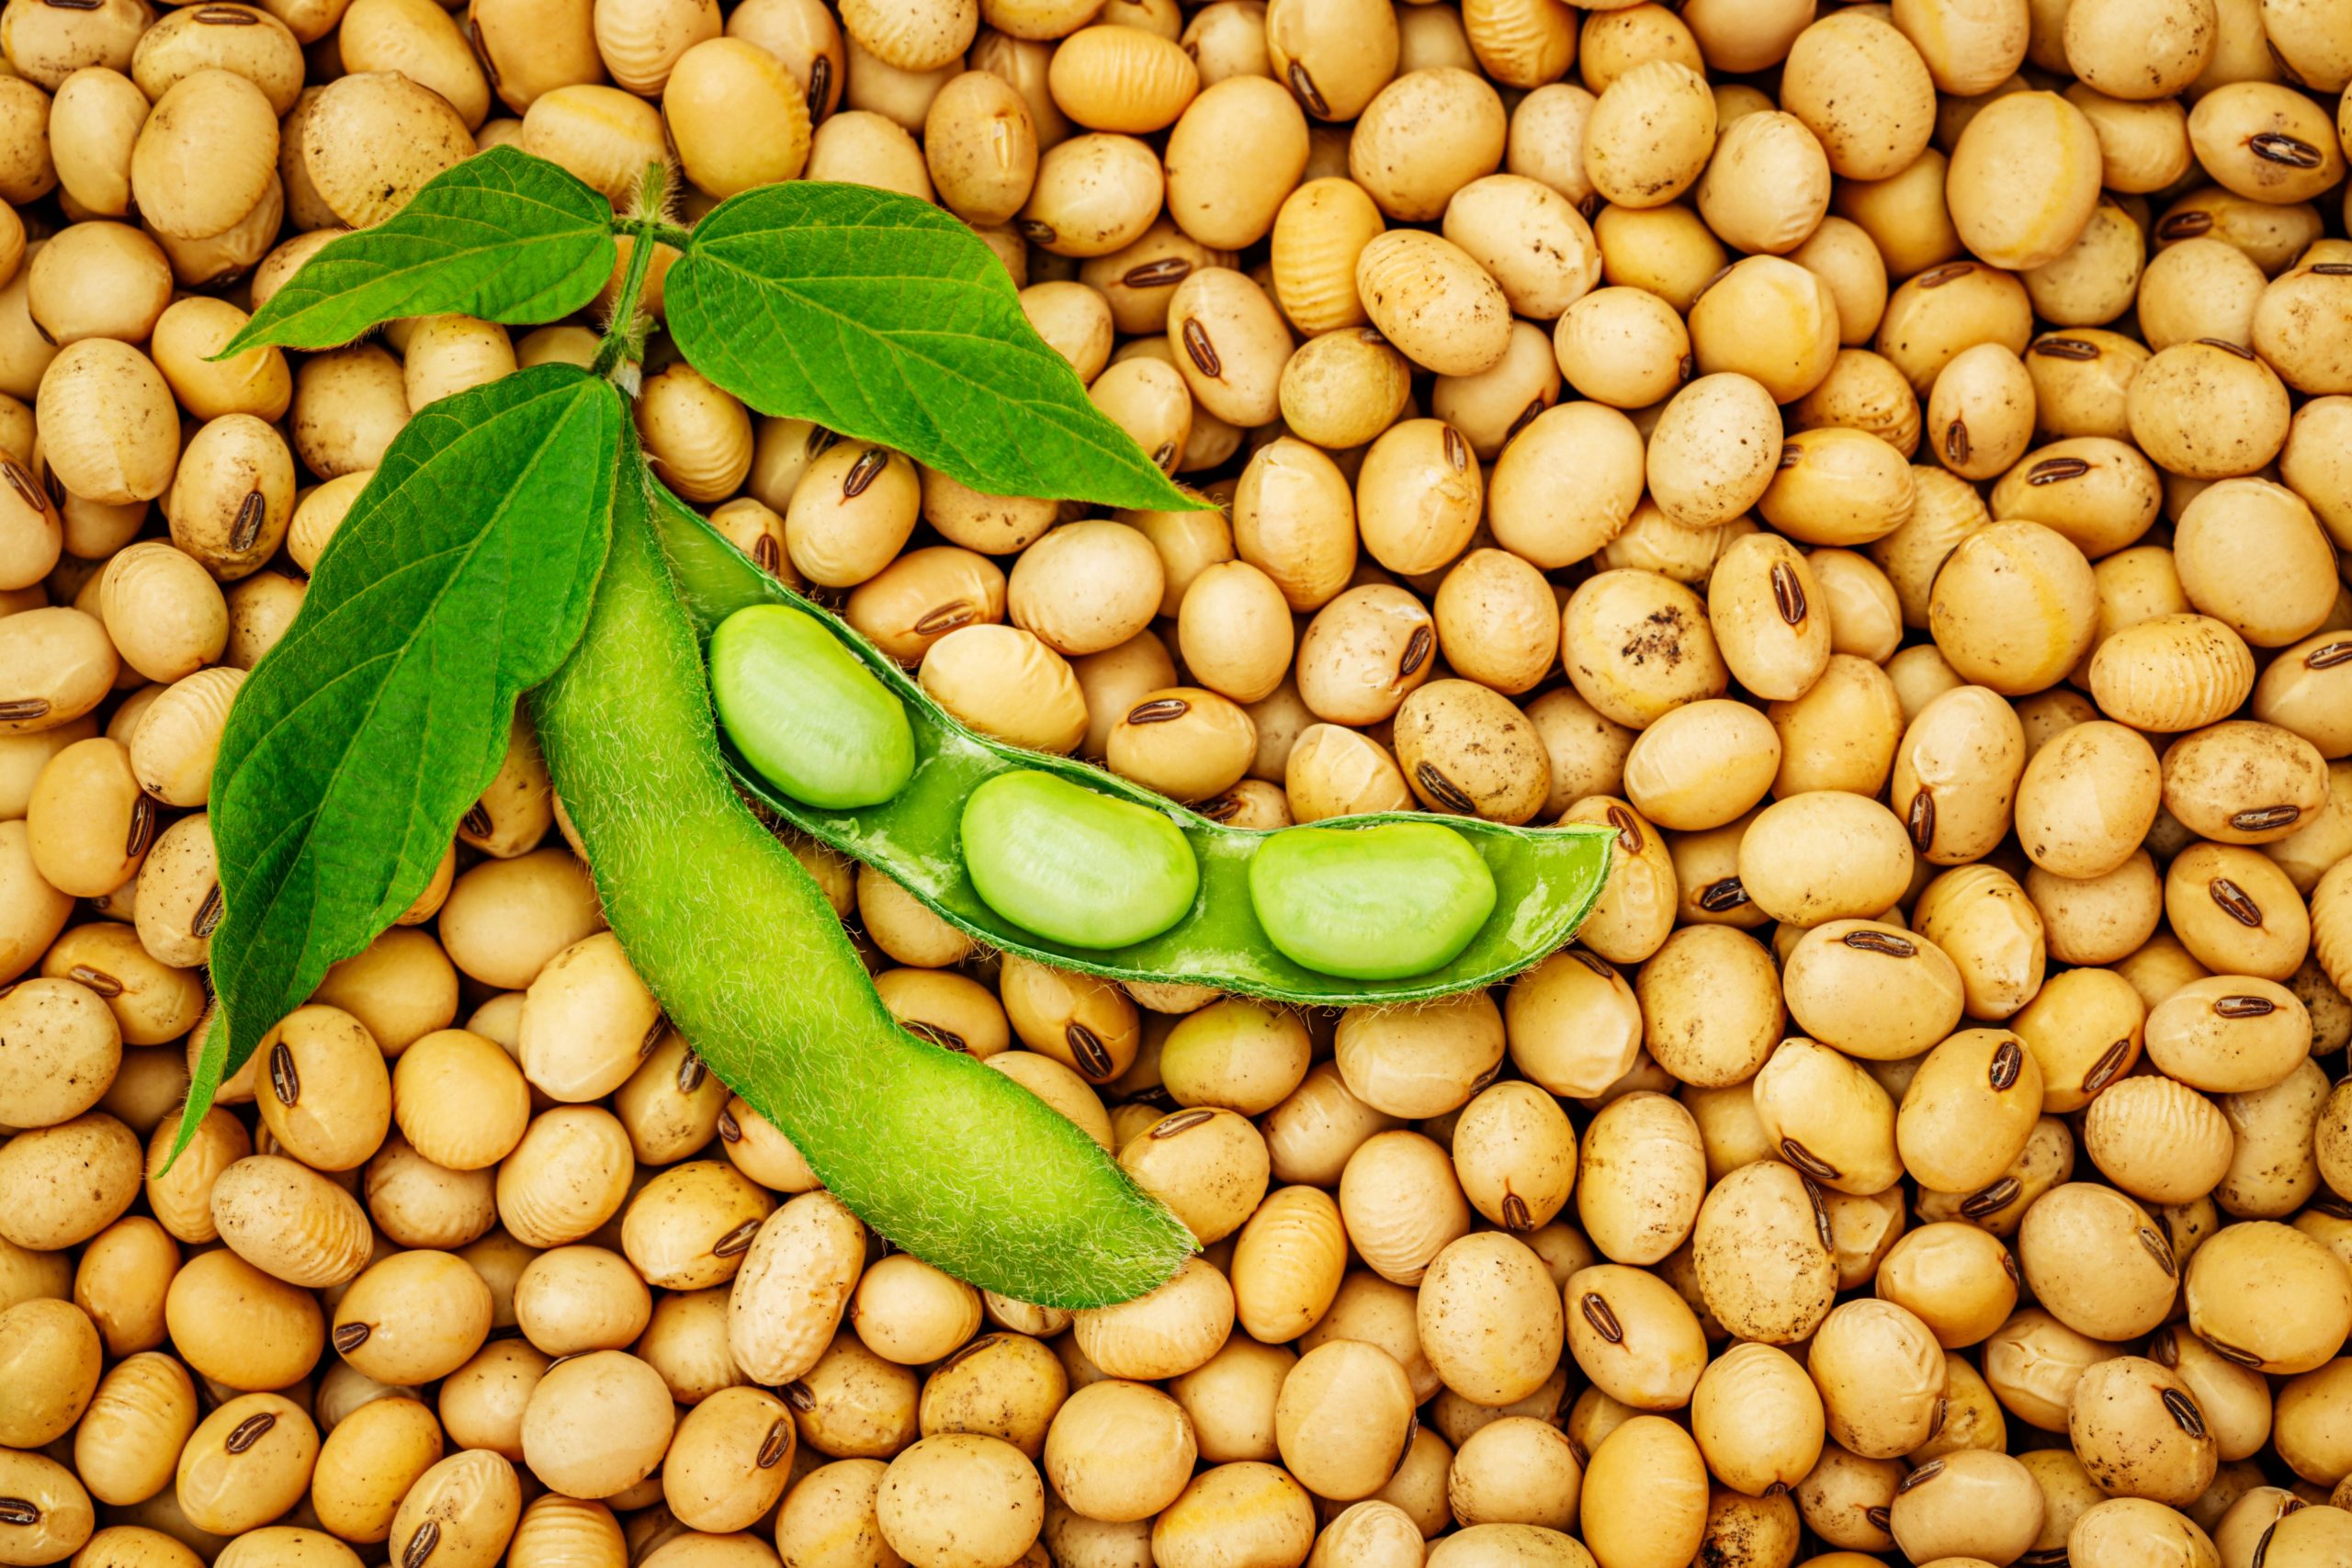 Glycine Soja (Soybean) Seed Extract Market